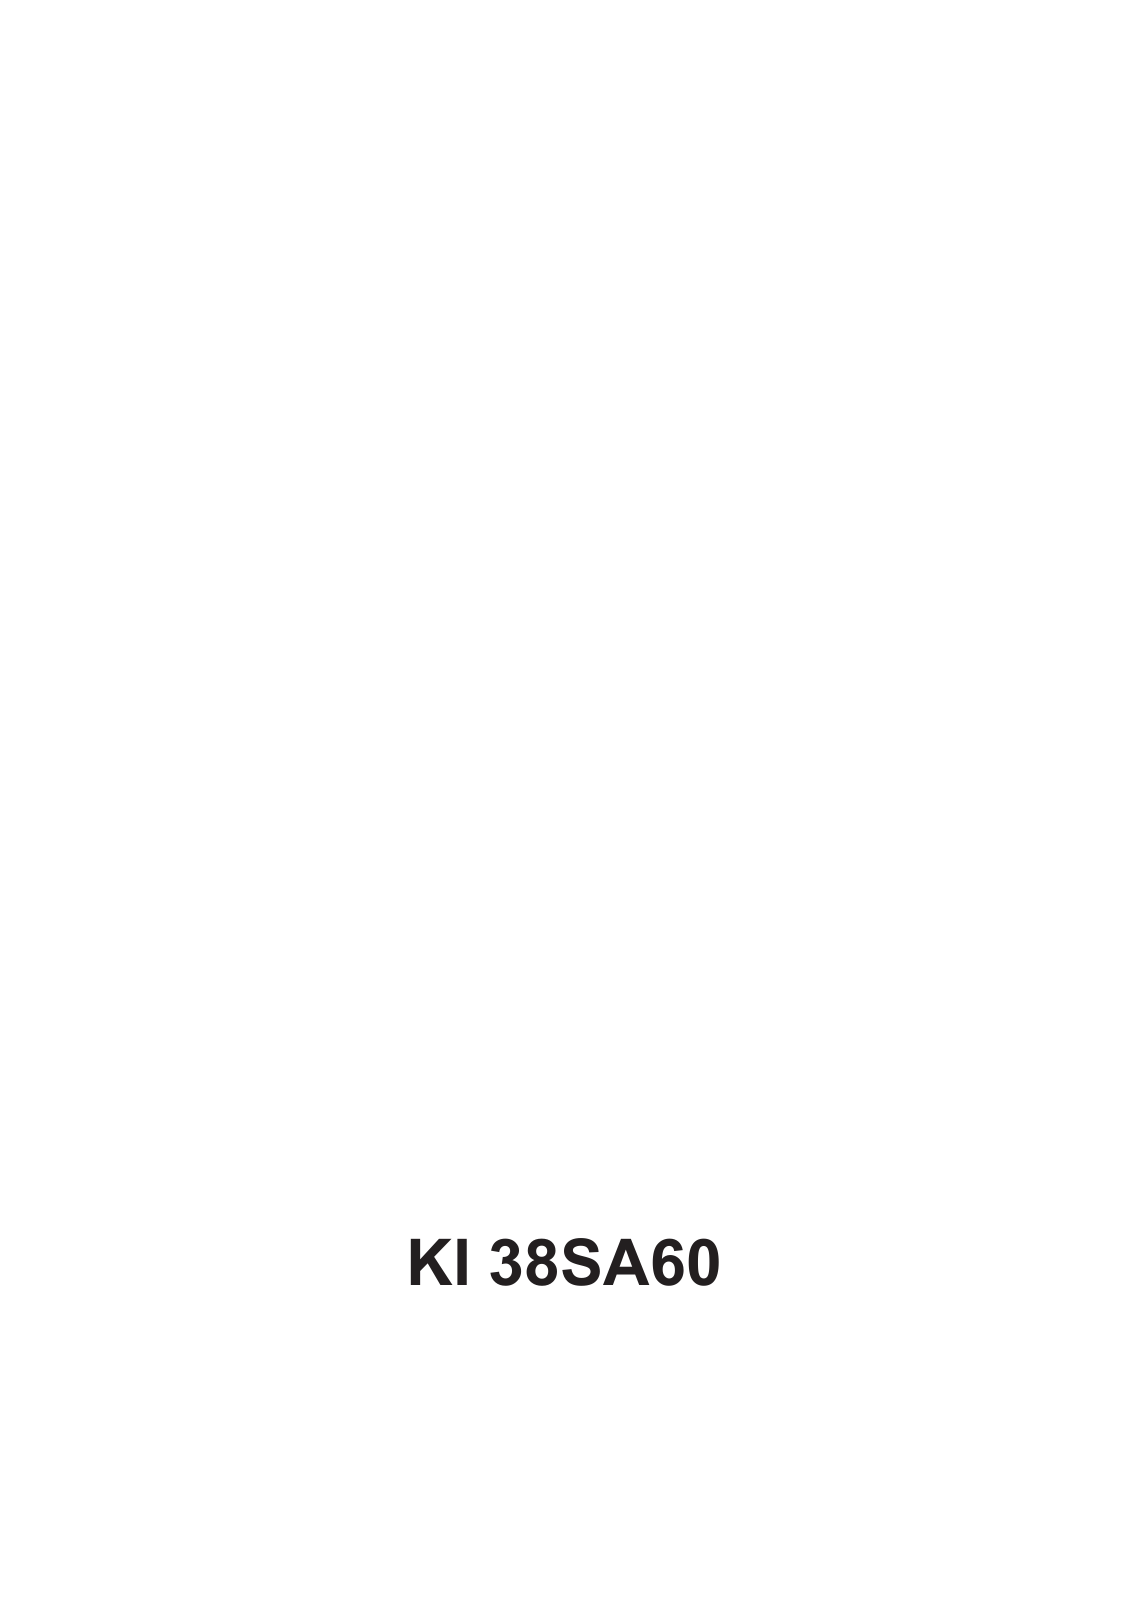 Siemens KI38SA60 User Manual